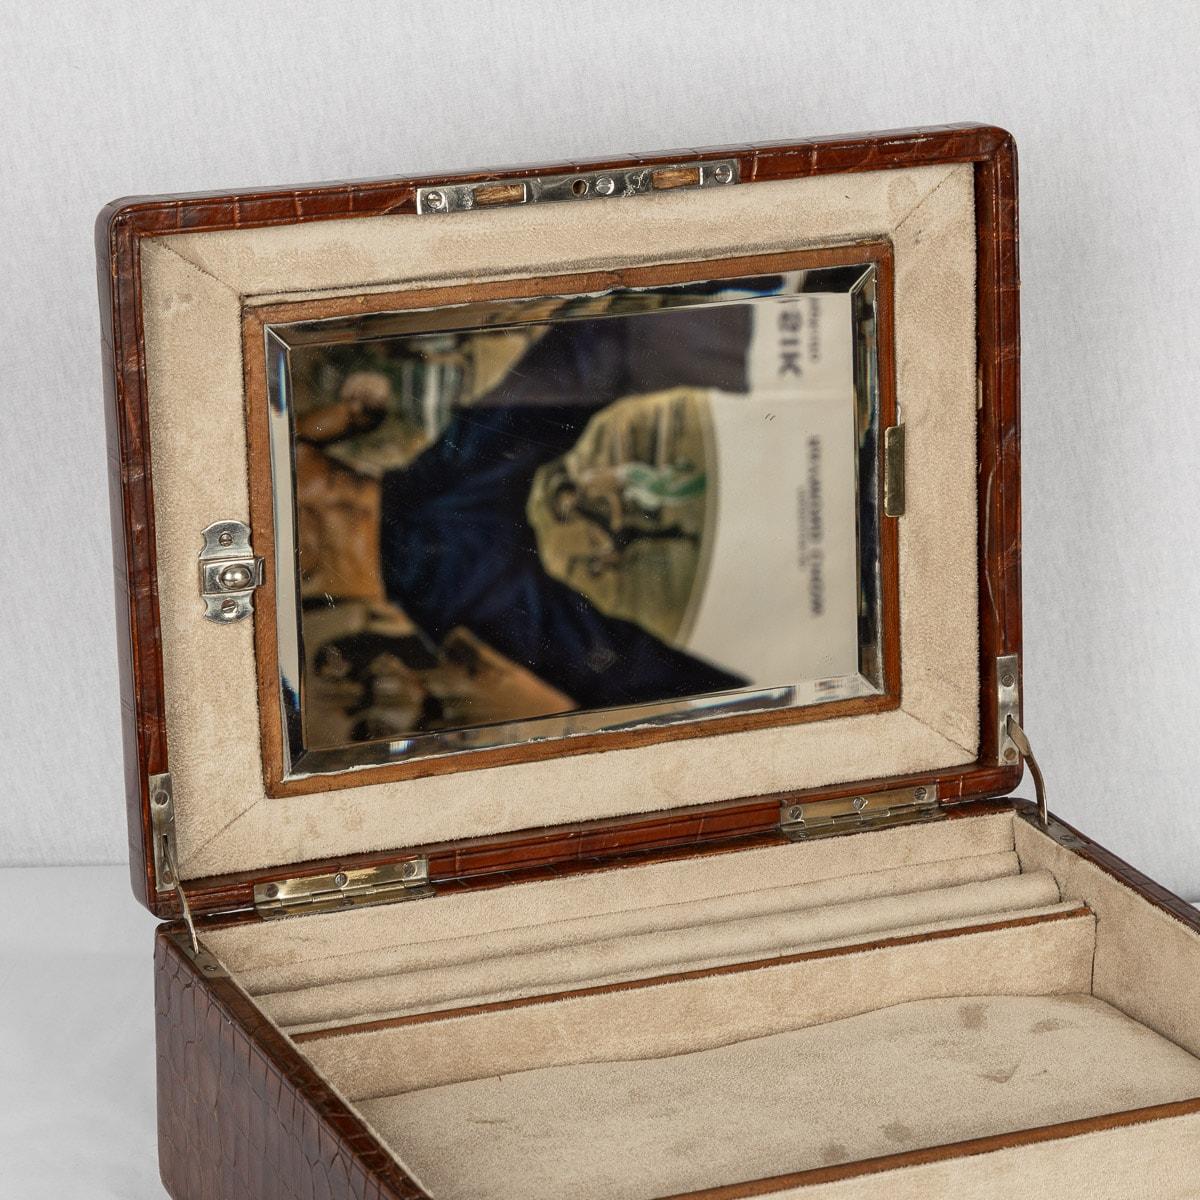 20th Century British Made Crocodile Travel Overnight Vanity Case, c.1900 For Sale 3